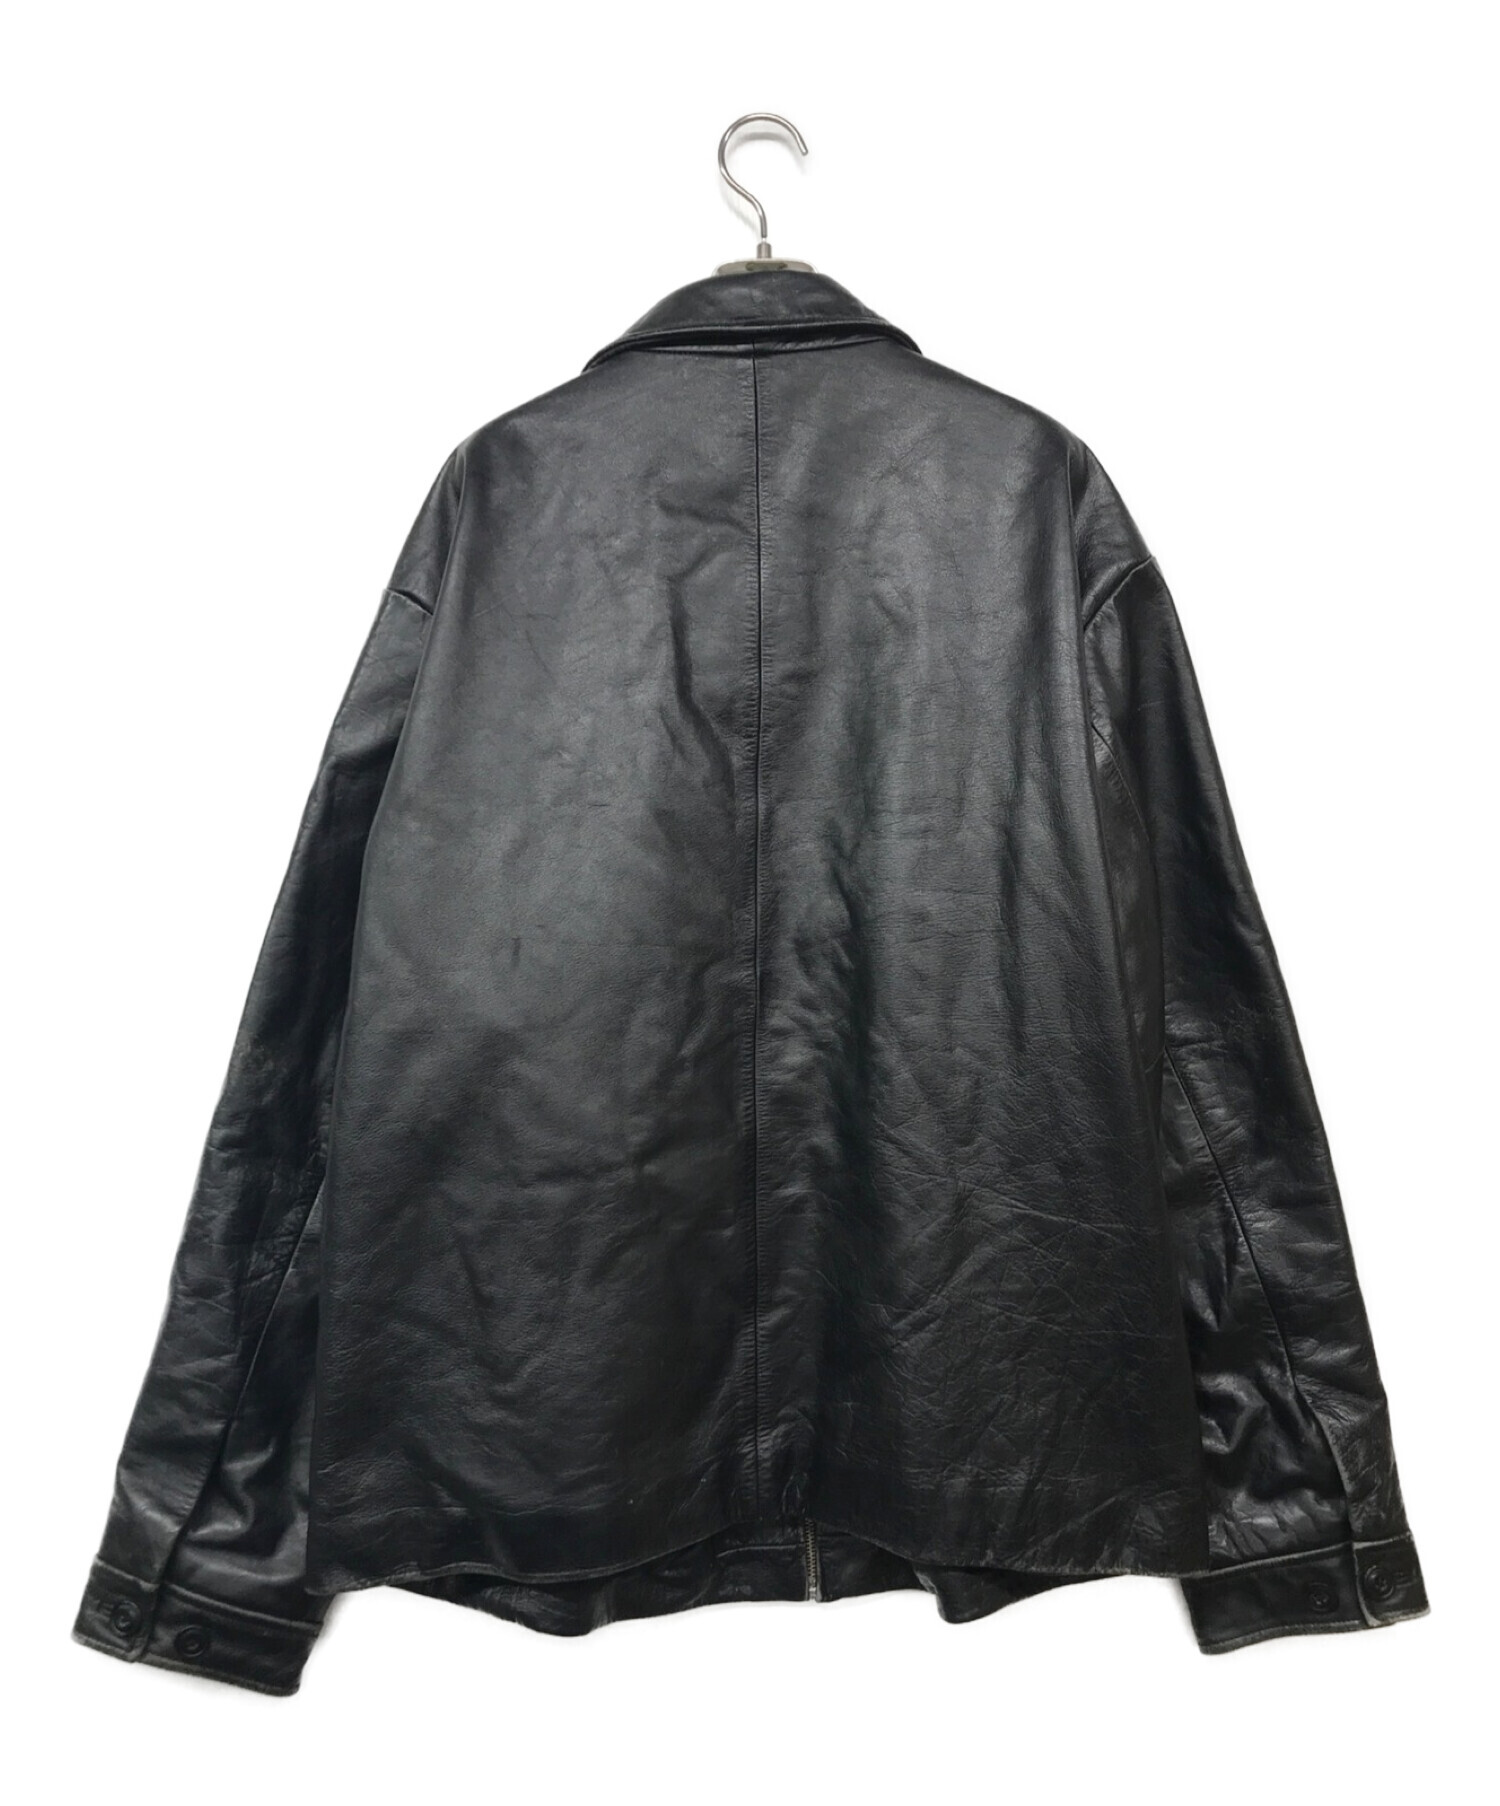 OLD GAP (オールドギャップ) ヴィンテージレザージャケット ブラック サイズ:XL